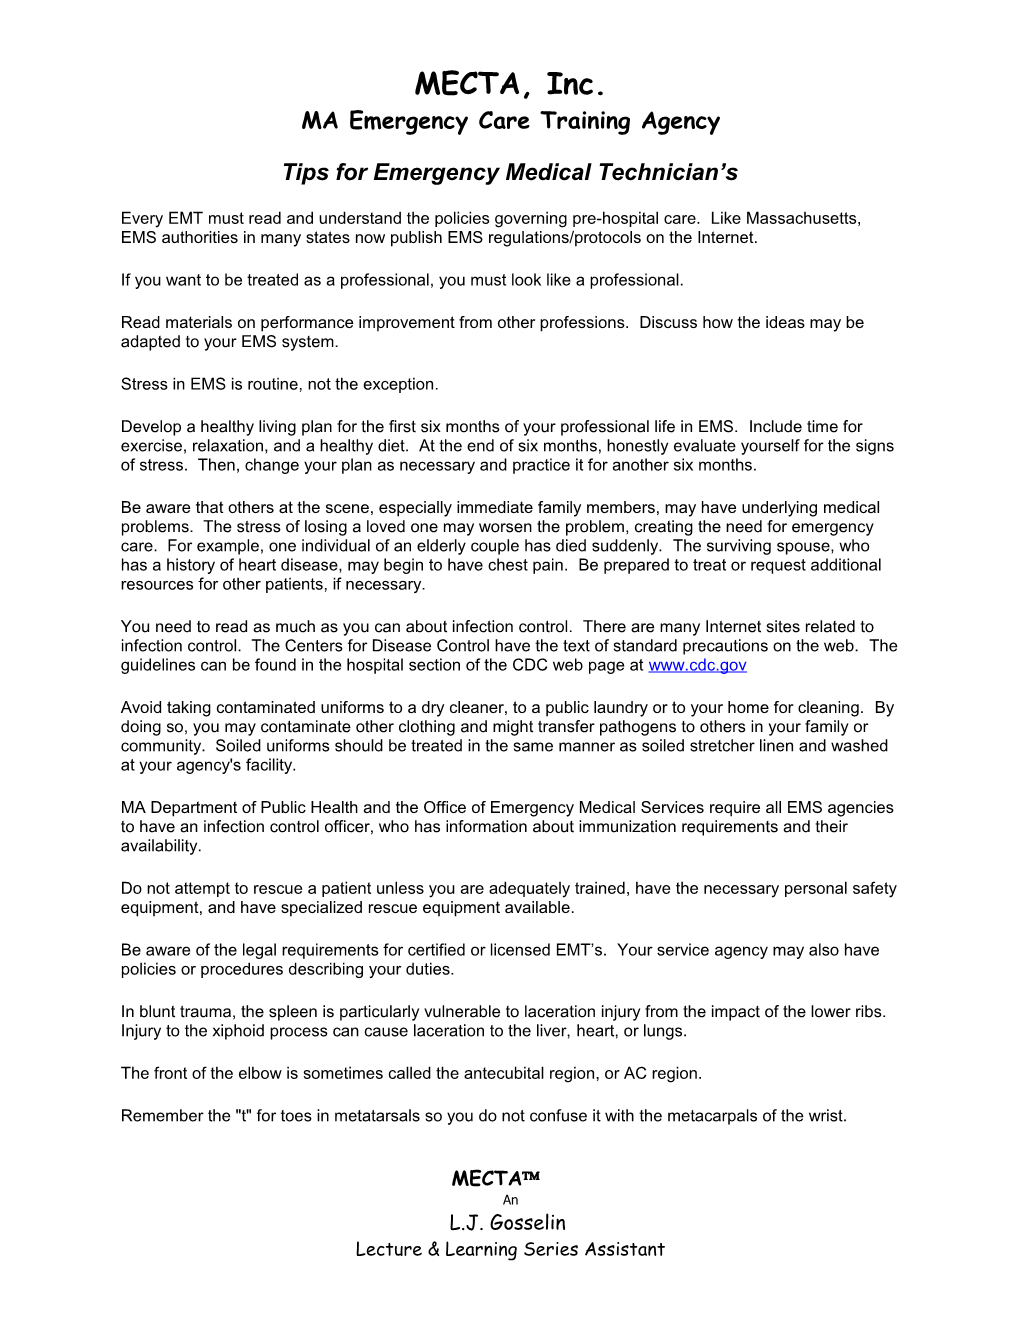 Emergency Medical Technician Tips